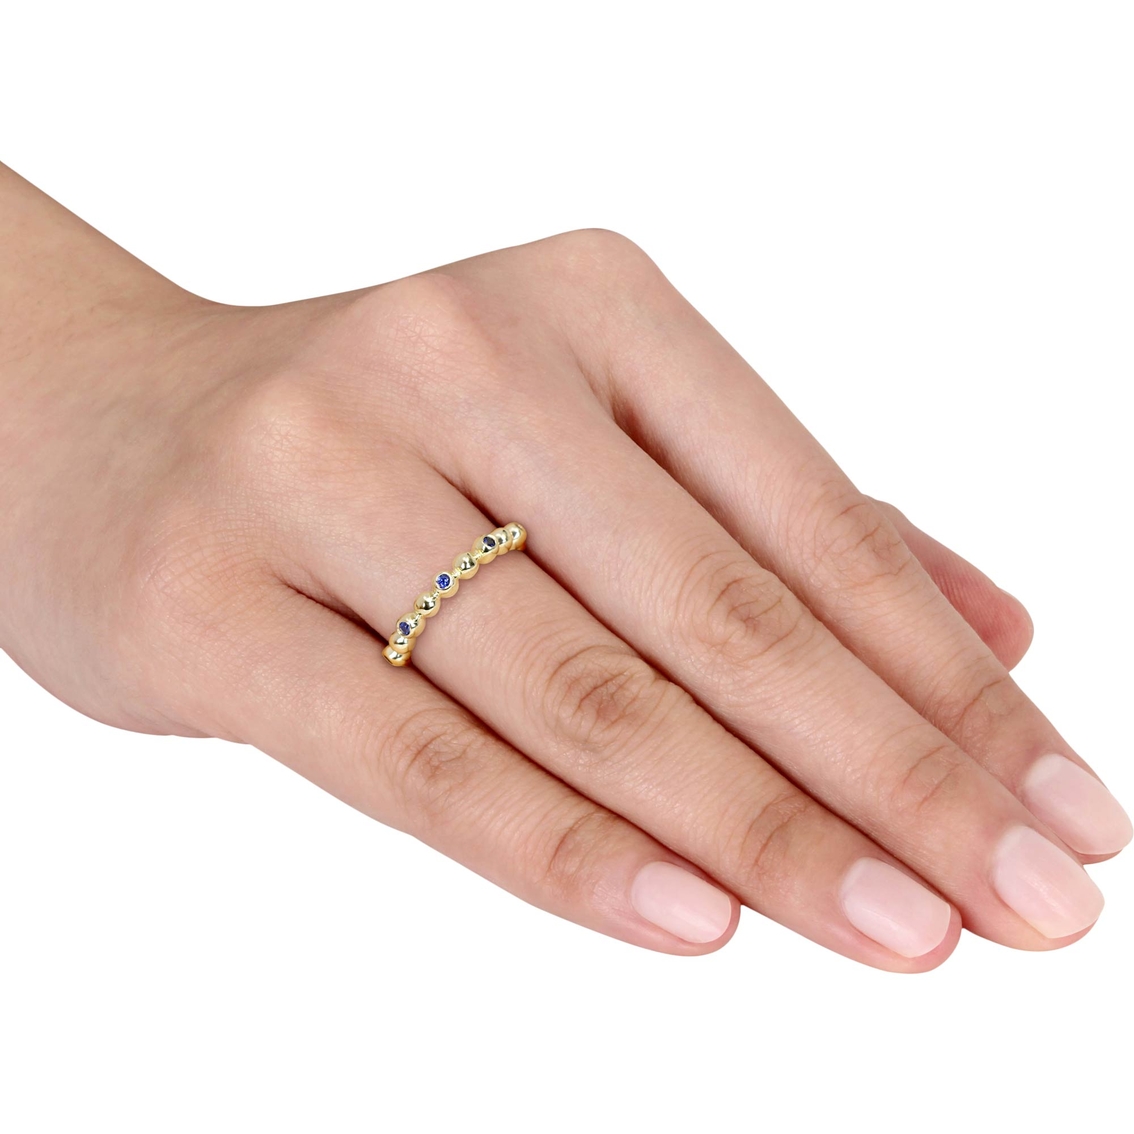 Sofia B. 14K Yellow Gold Sapphire Scalloped Eternity Ring, Size 7 - Image 4 of 4